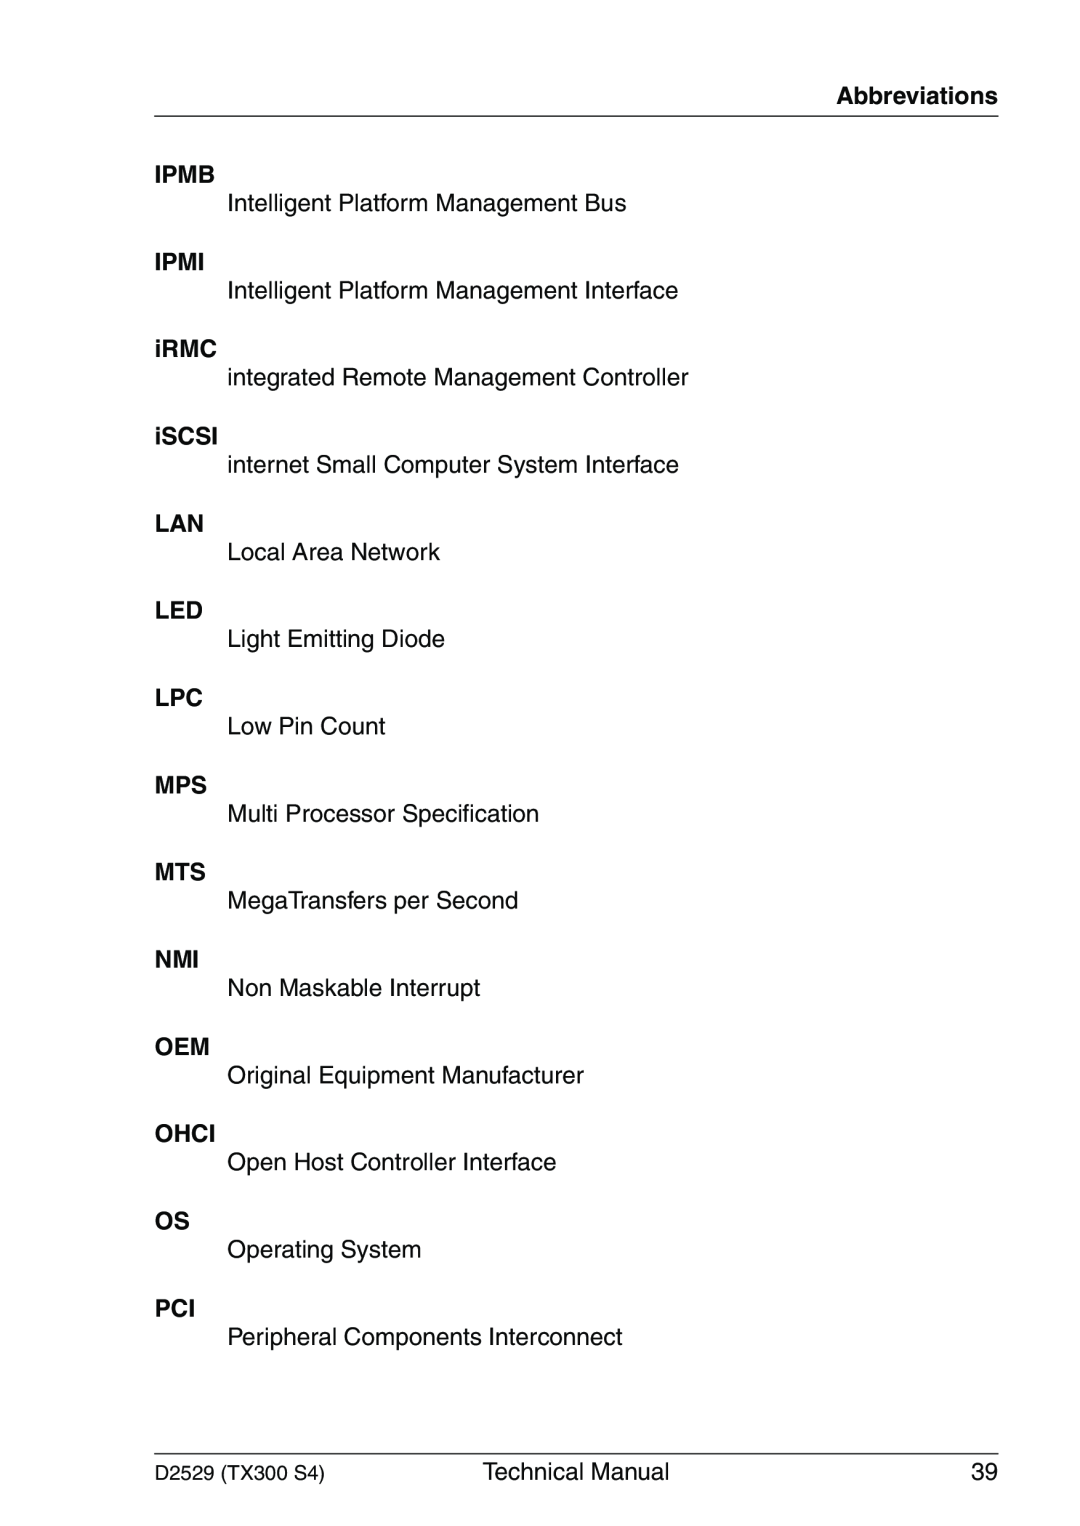 Fujitsu D2529 technical manual Abbreviations IPMB, Ipmi, iRMC, iSCSI, Ohci 